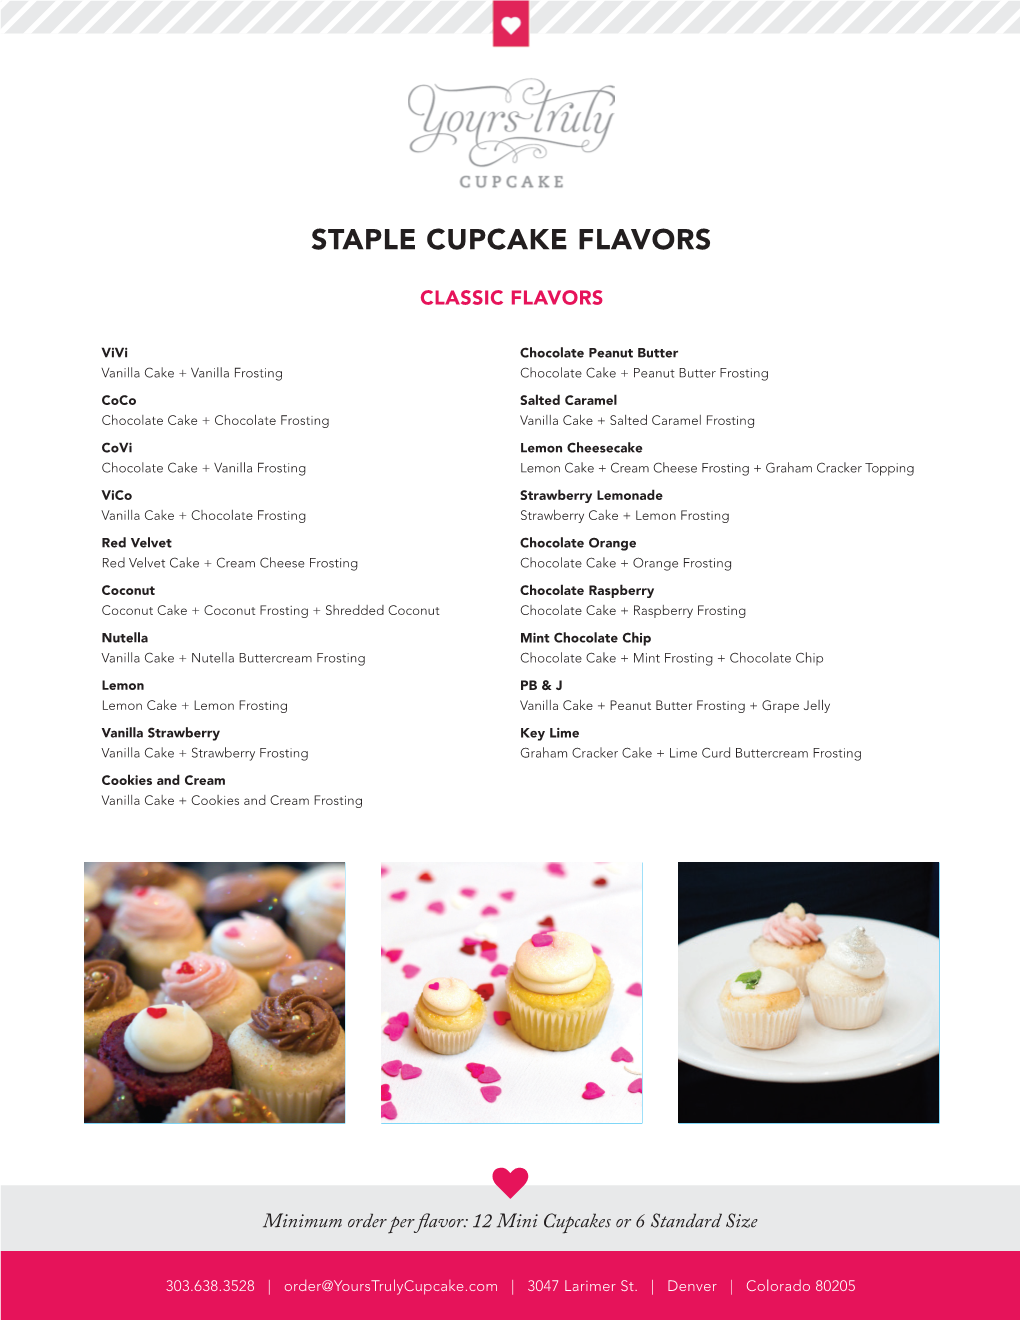 Staple Cupcake Flavors